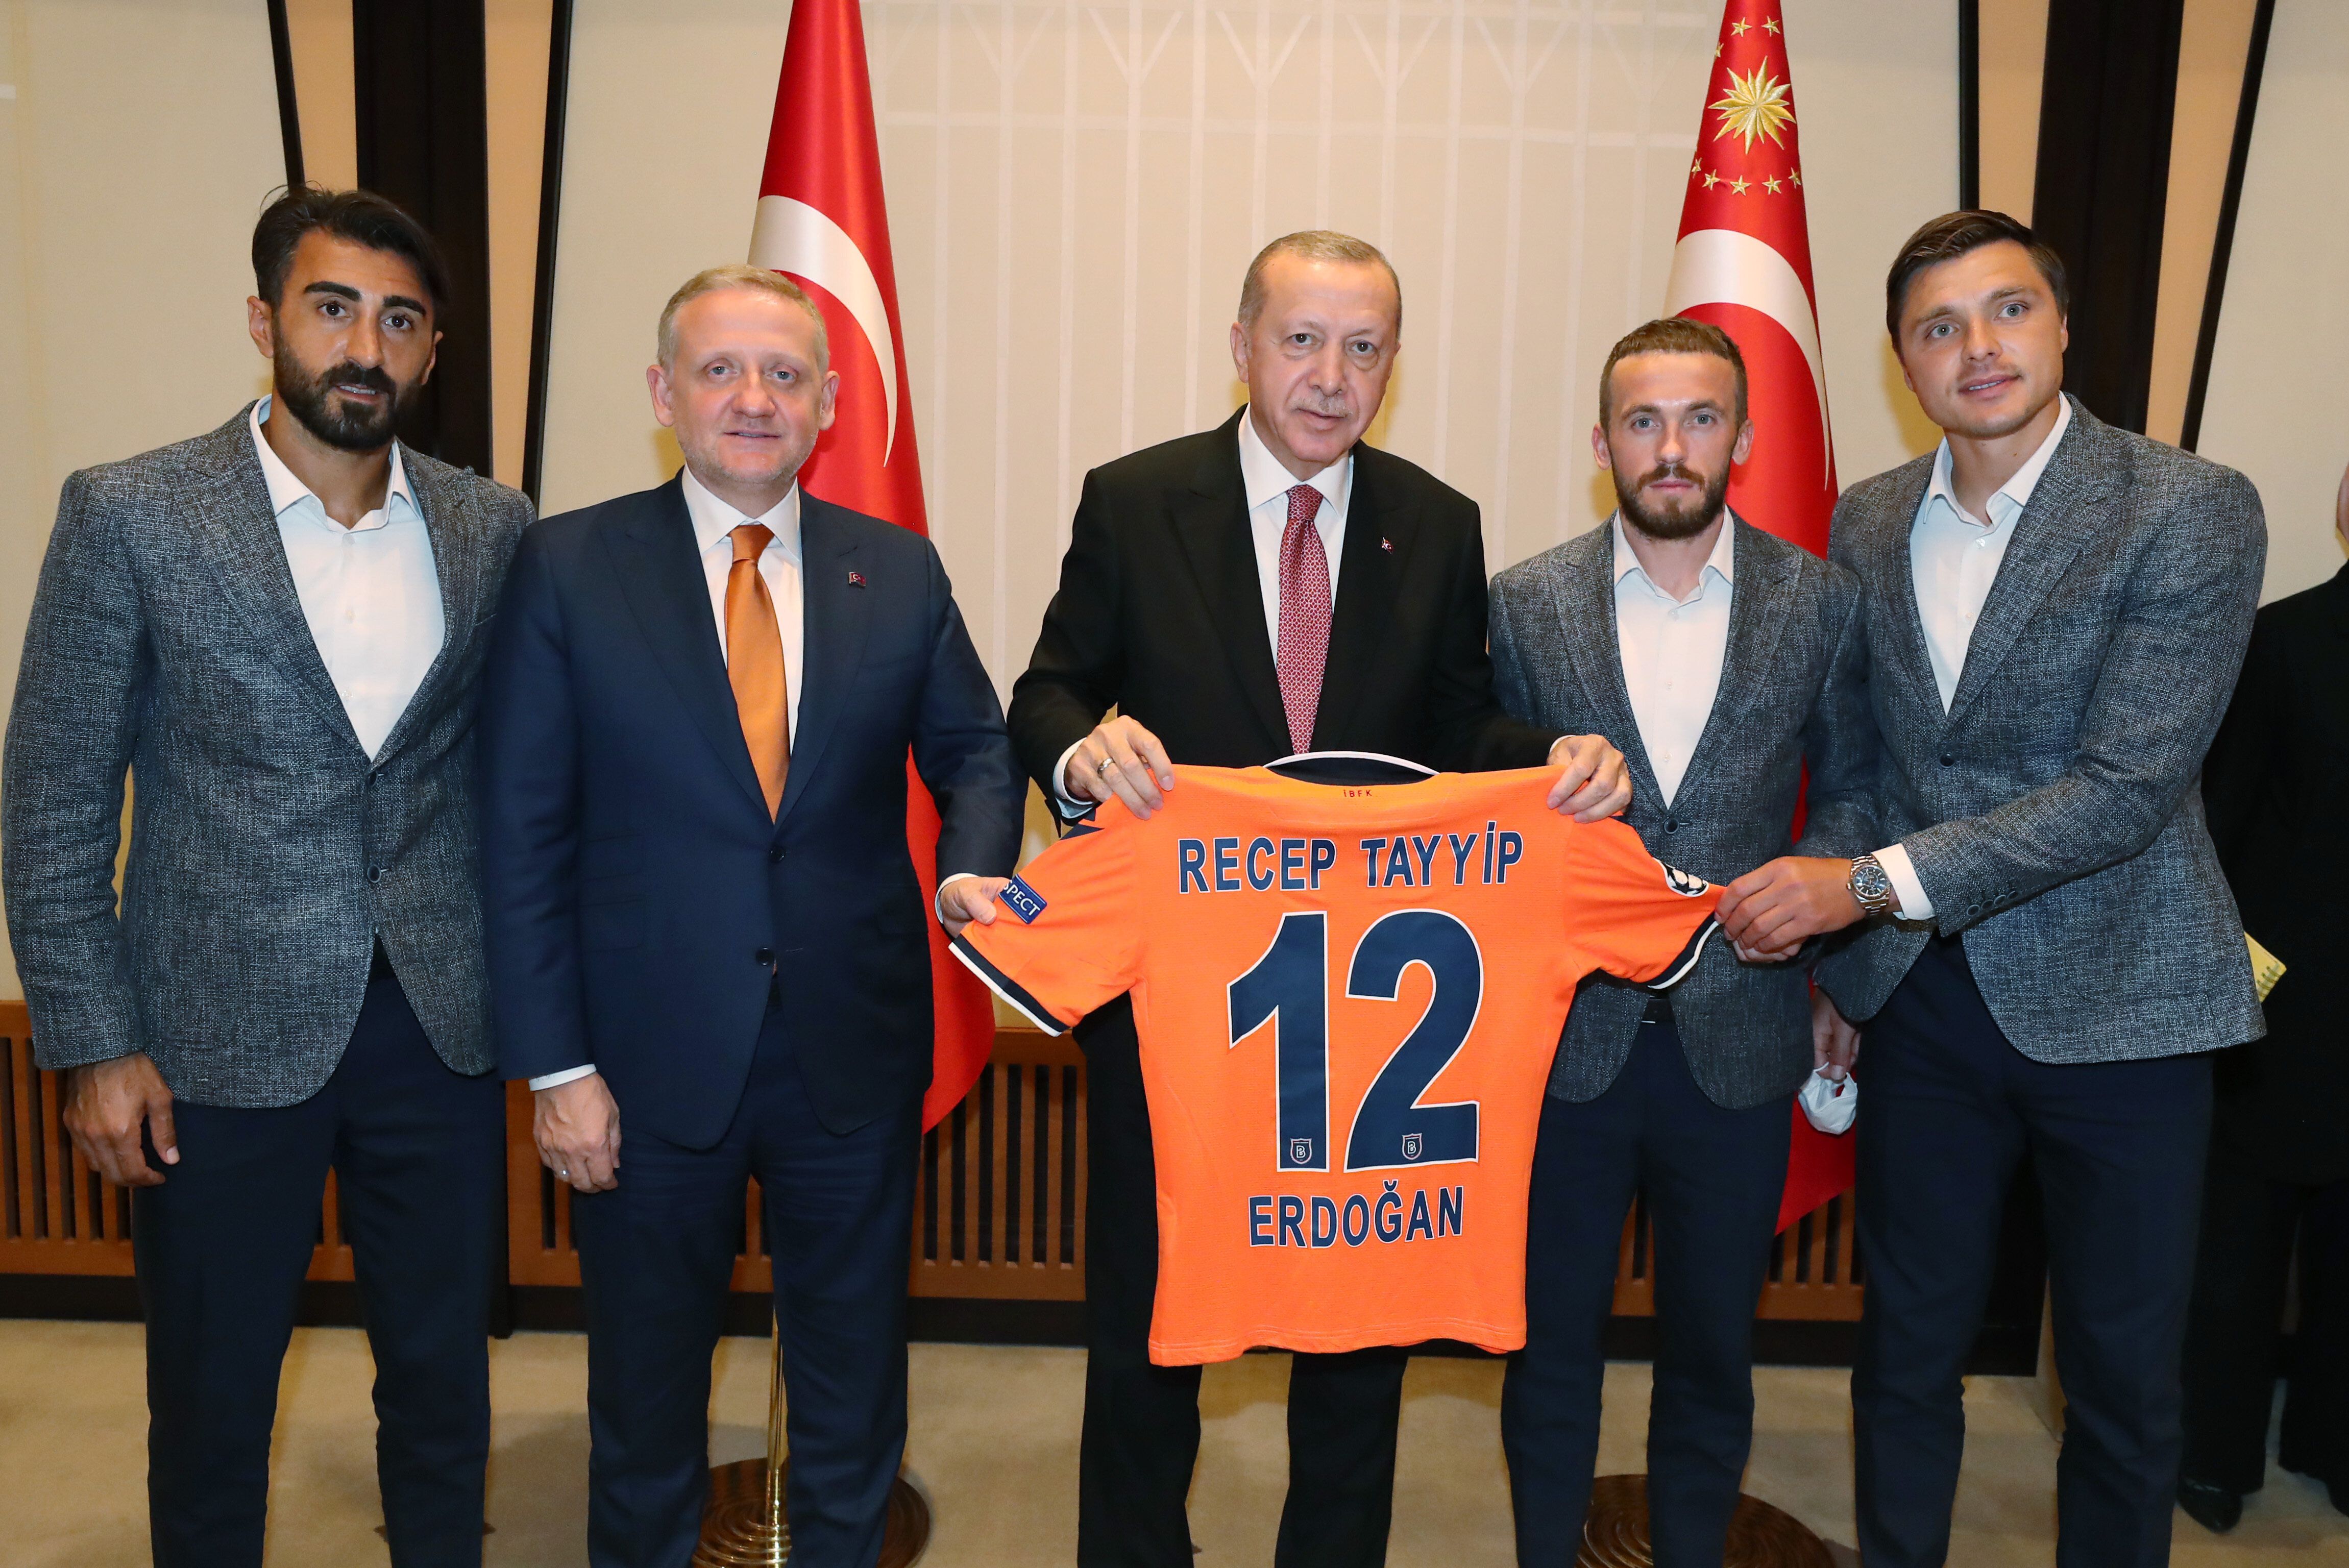 Recep Tayyip Erdogan et le patron du Basaksehir, Goksel Gumusdag, posent au palais présidentiel...